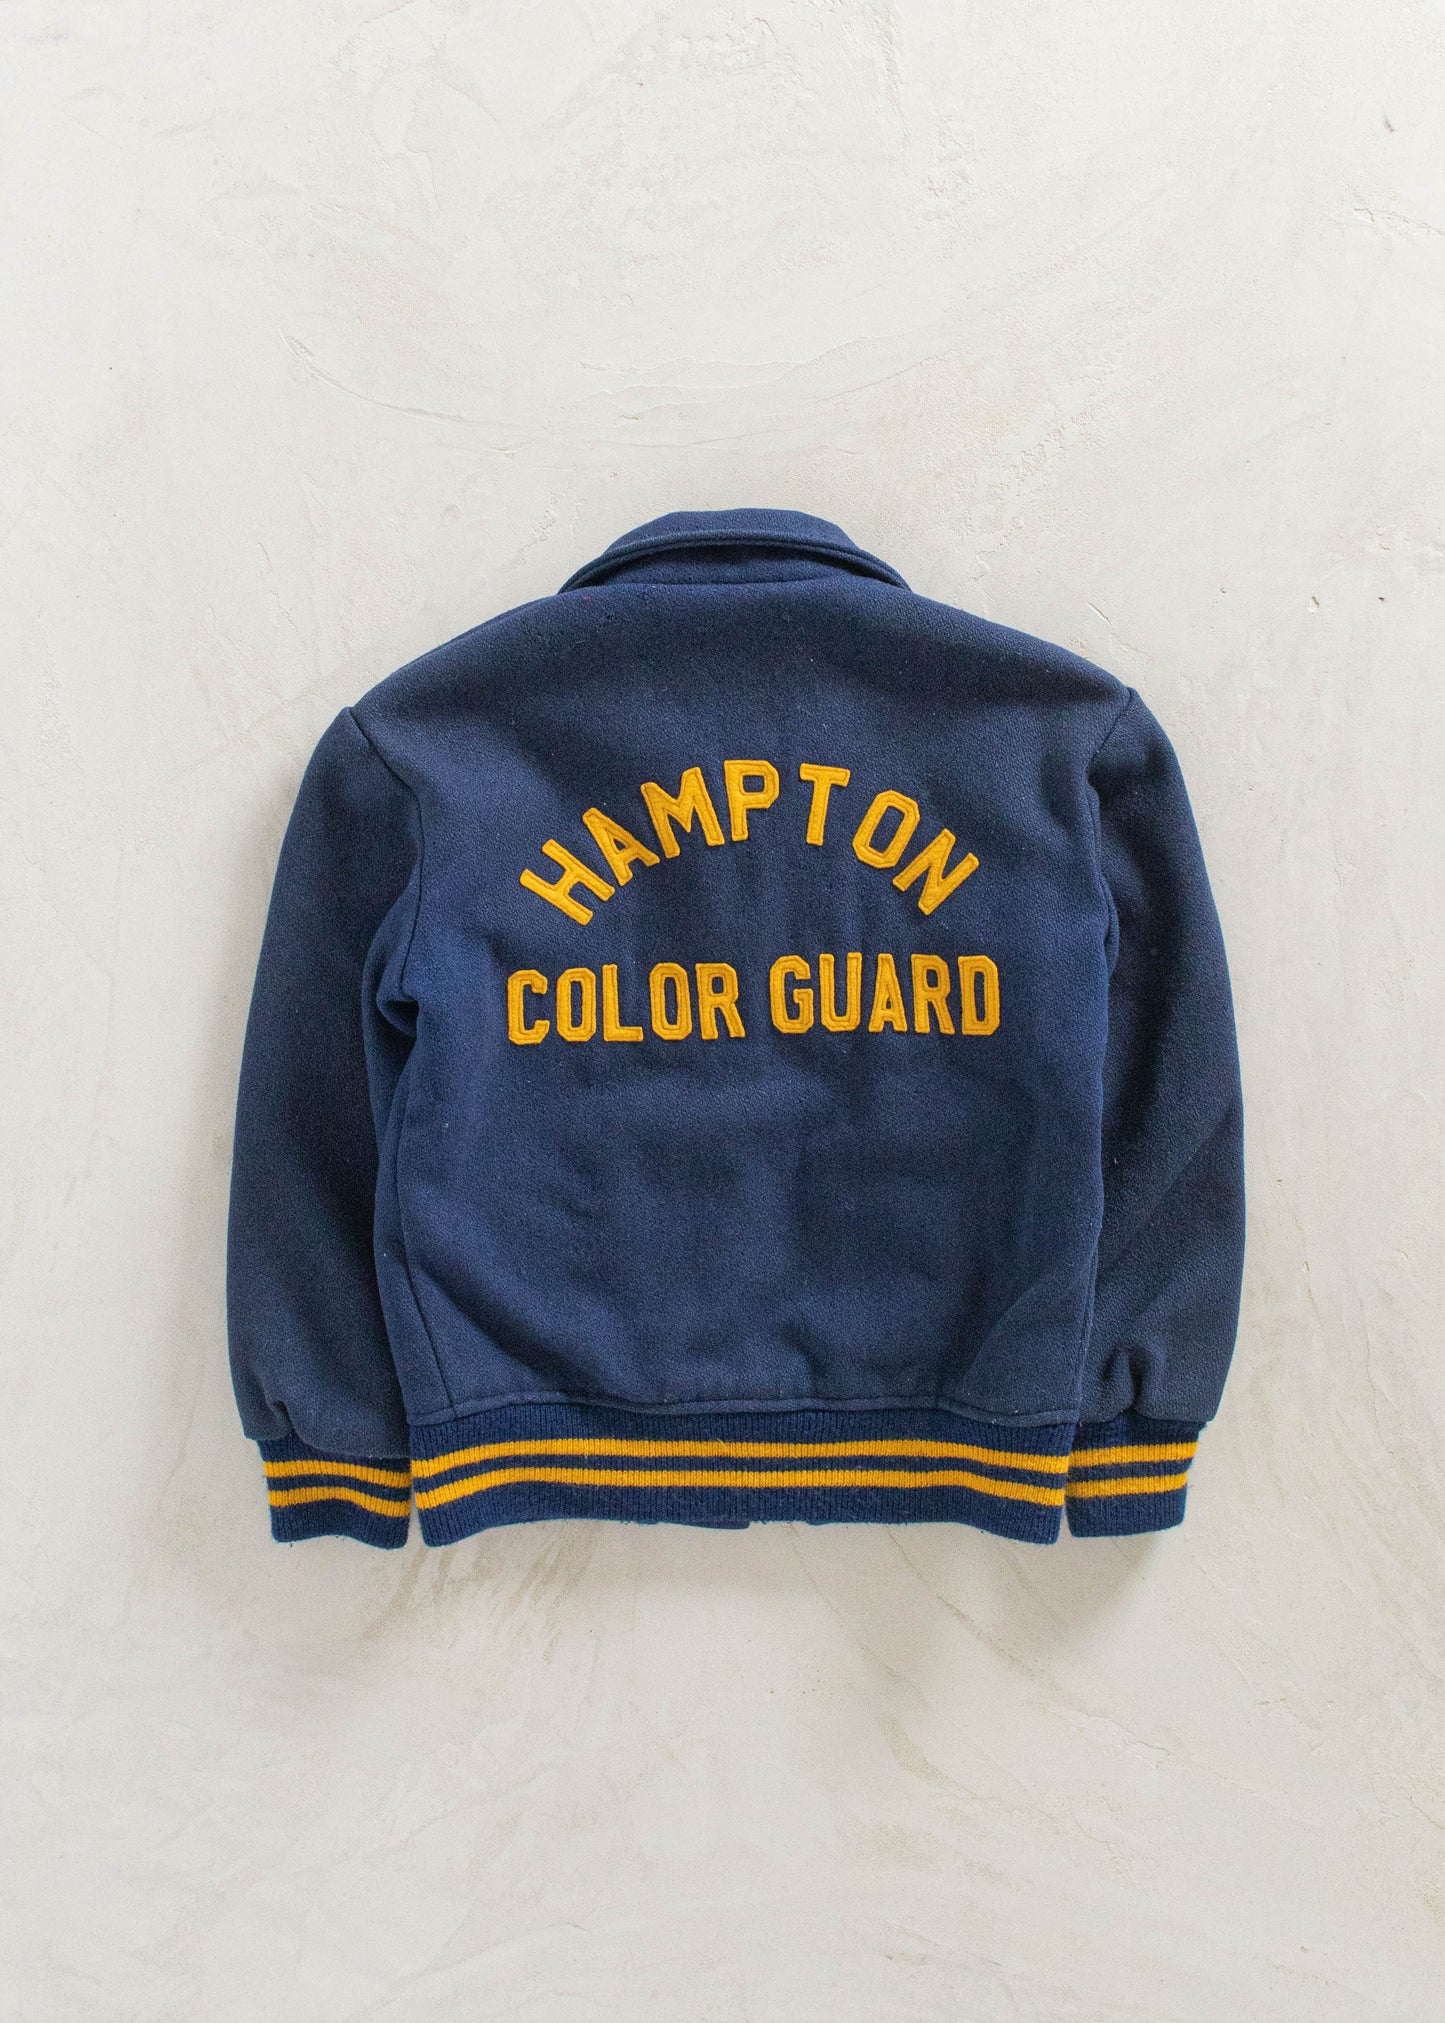 Vintage 1960s The Standard Pennant Co. Hampton Colour Guard Varsity Jacket Size S/M